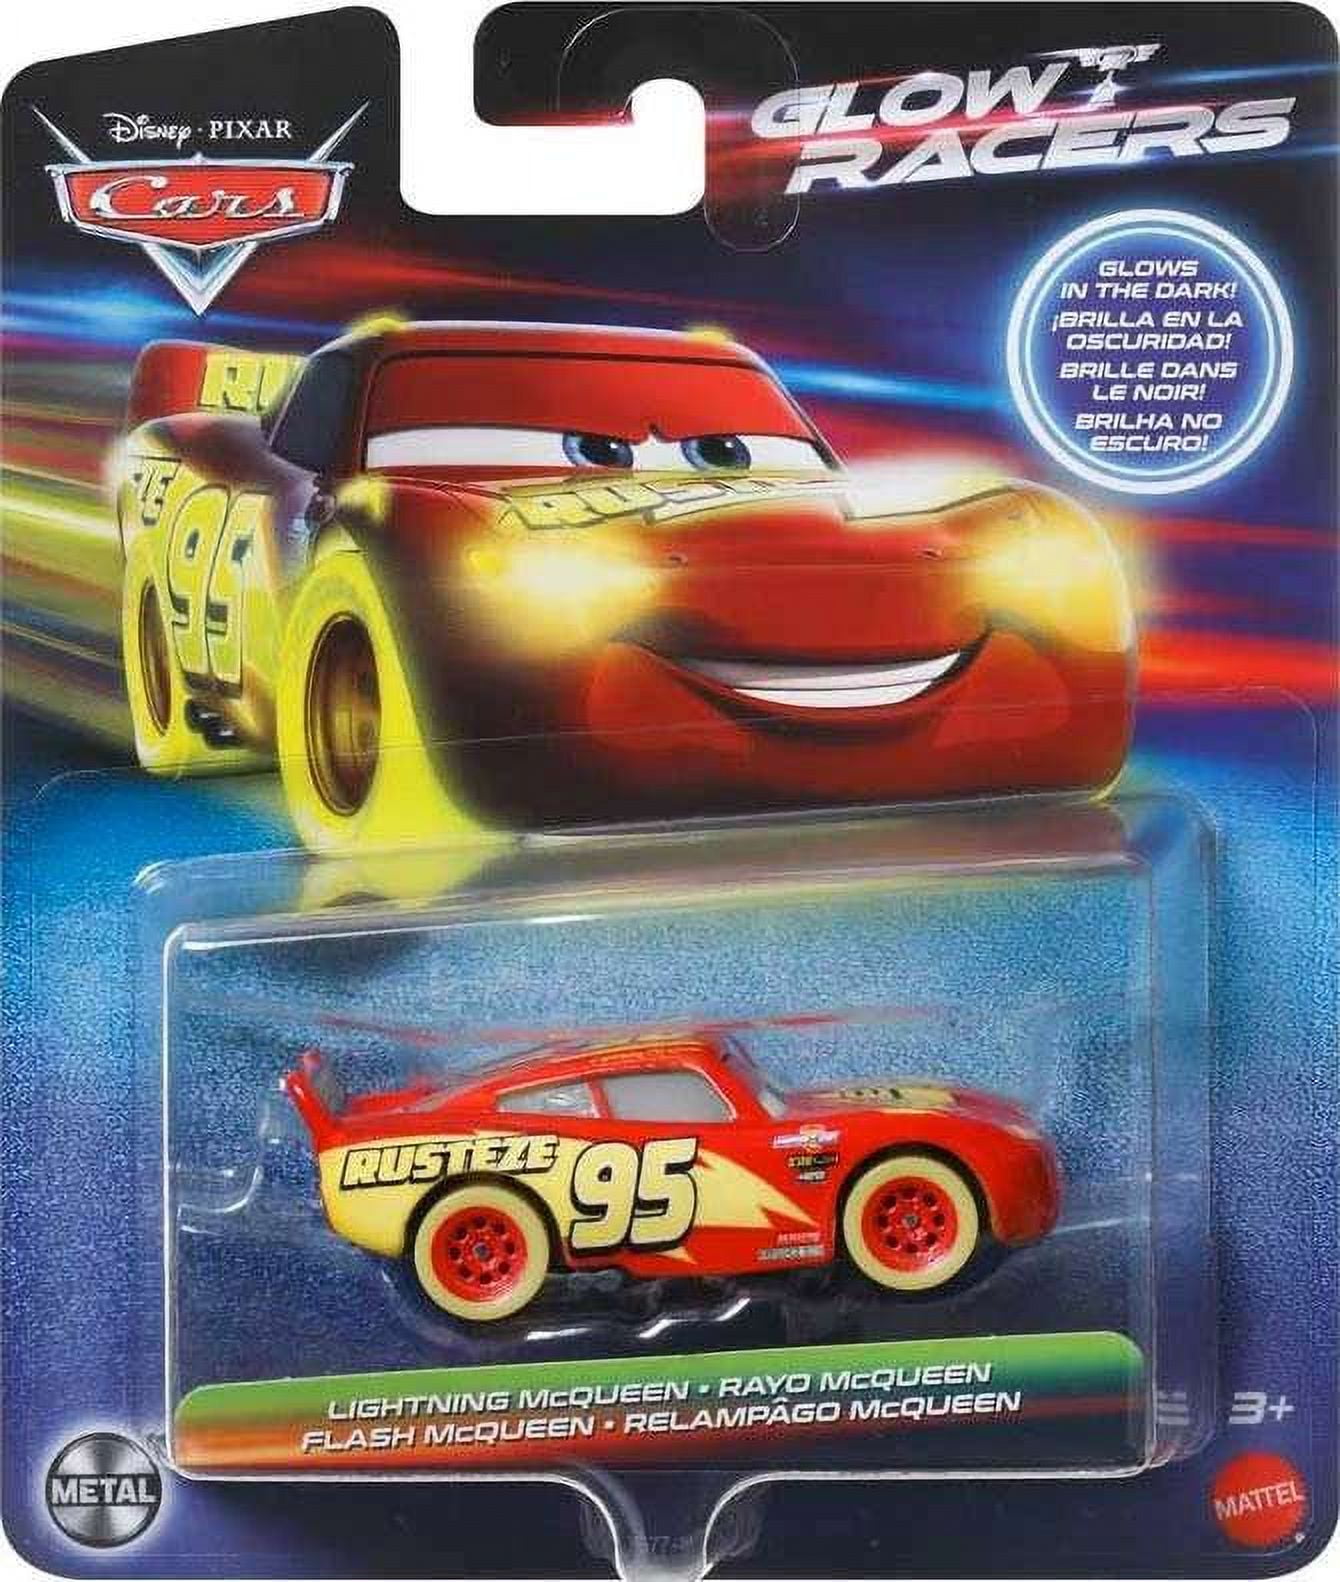 Disney / Pixar Cars Glow Racers Lightning McQueen Diecast Car